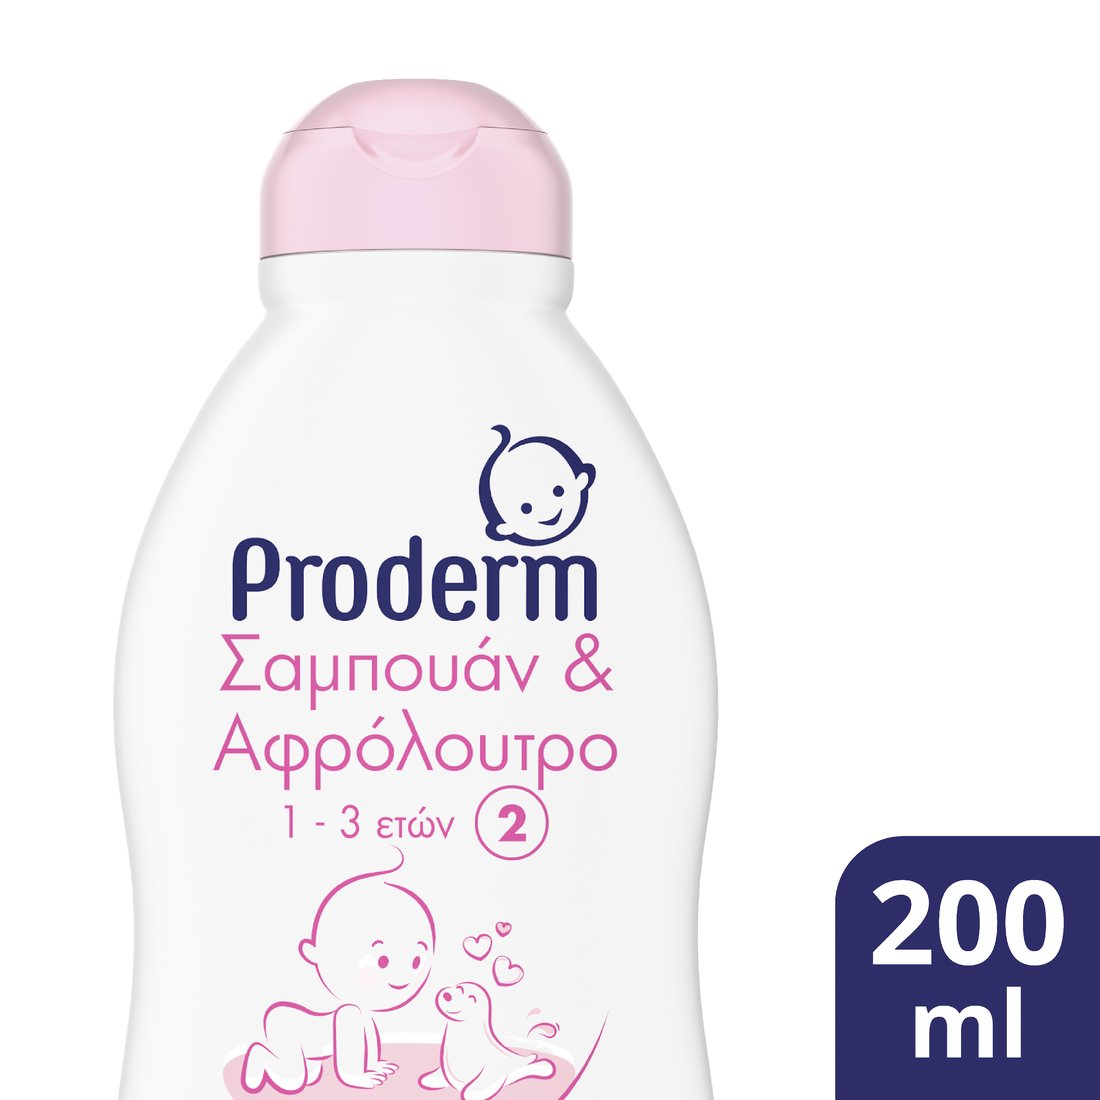 Proderm Shampoo & Shower Baby Σαμπουάν & Αφρόλουτρο Νο.2 για Παιδιά από 1 έως 3 Χρονών για Ήπιο & Απαλό Καθαρισμό 200ml